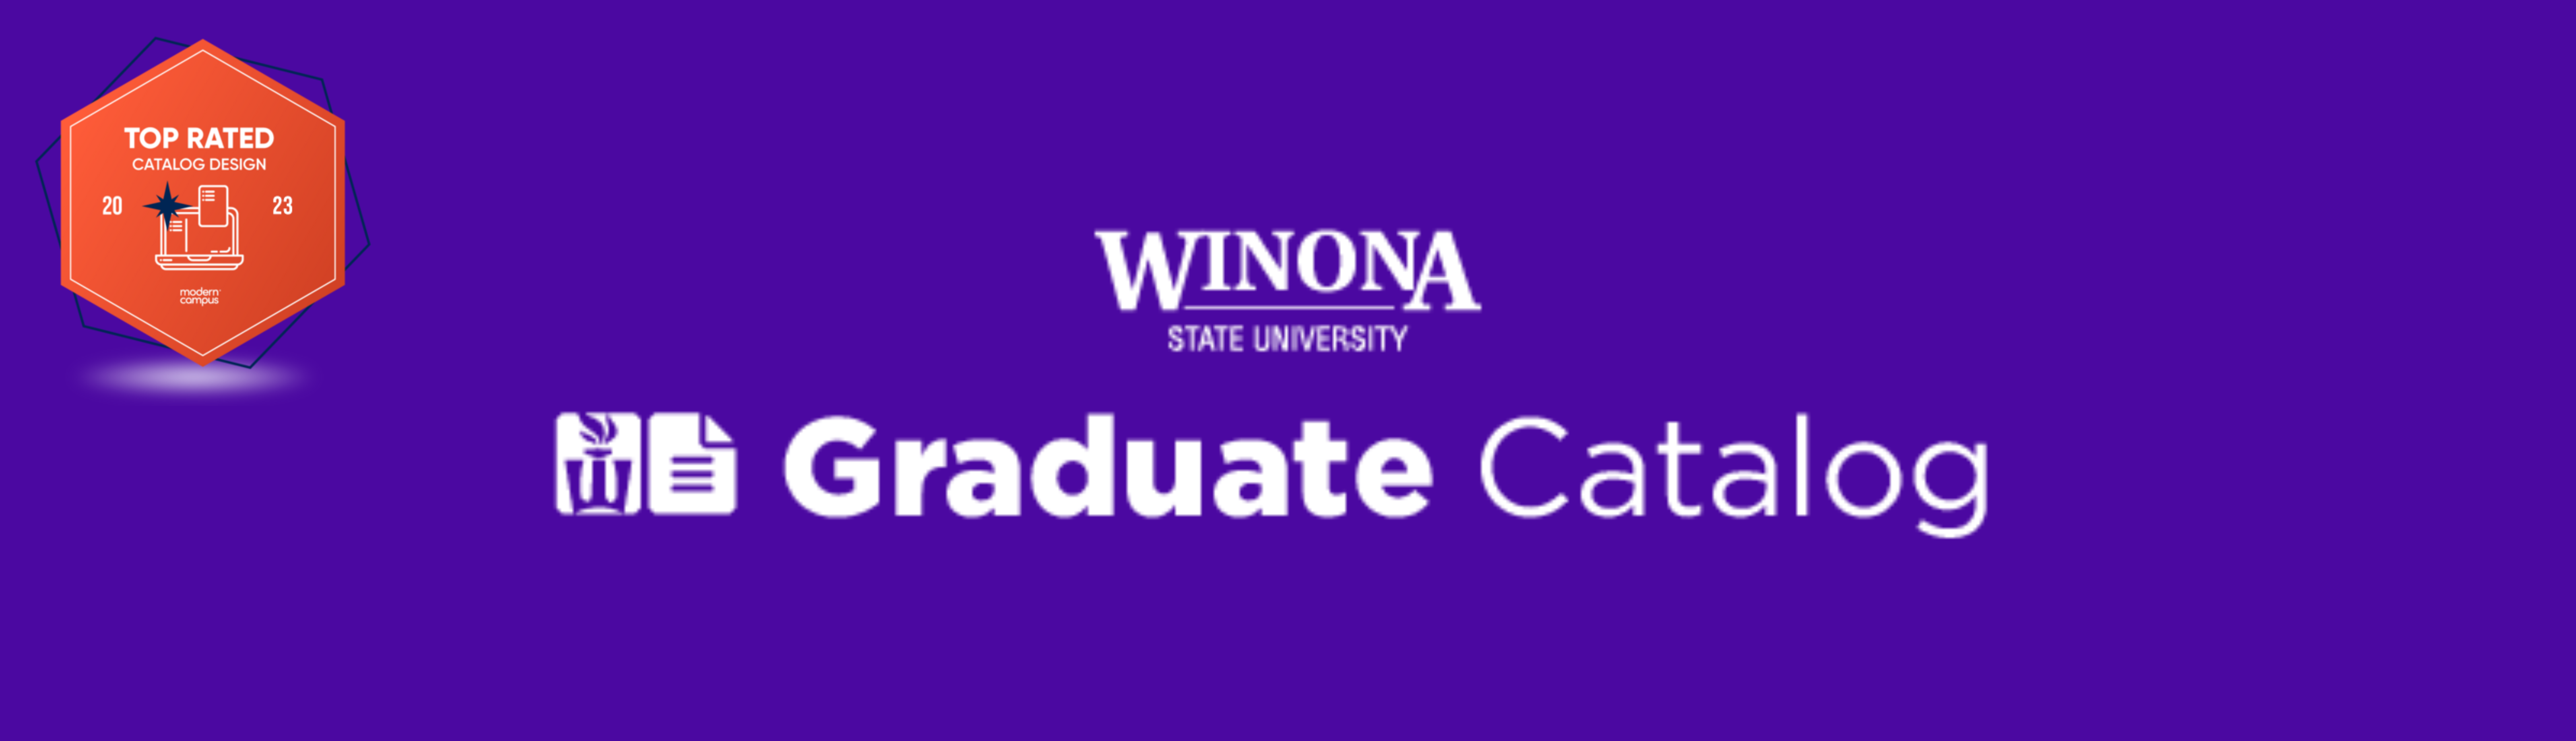 graduate catalog banner image